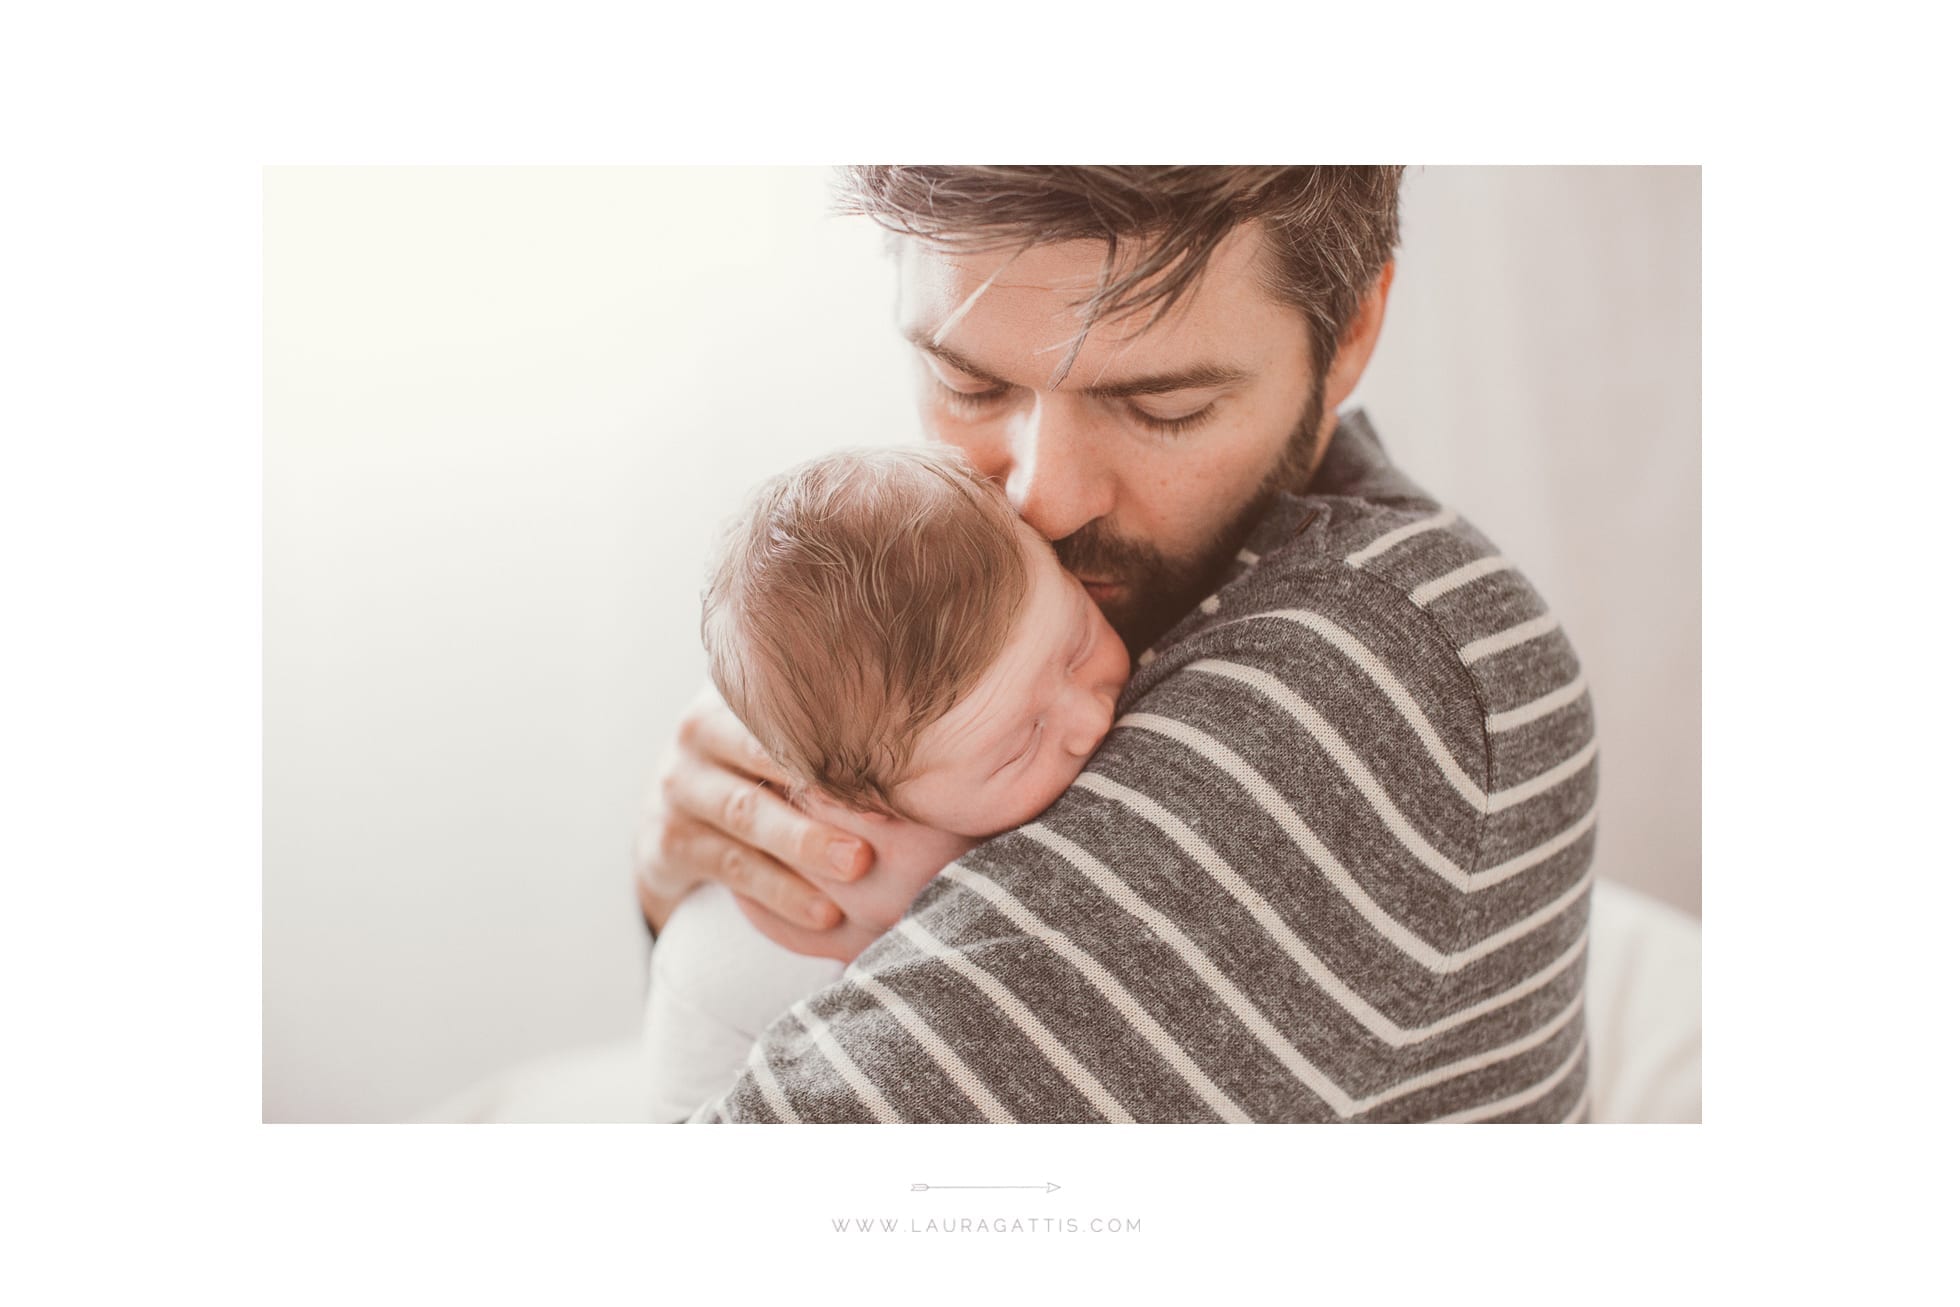 baby led posing | newborn natural light photography | laura gattis photography